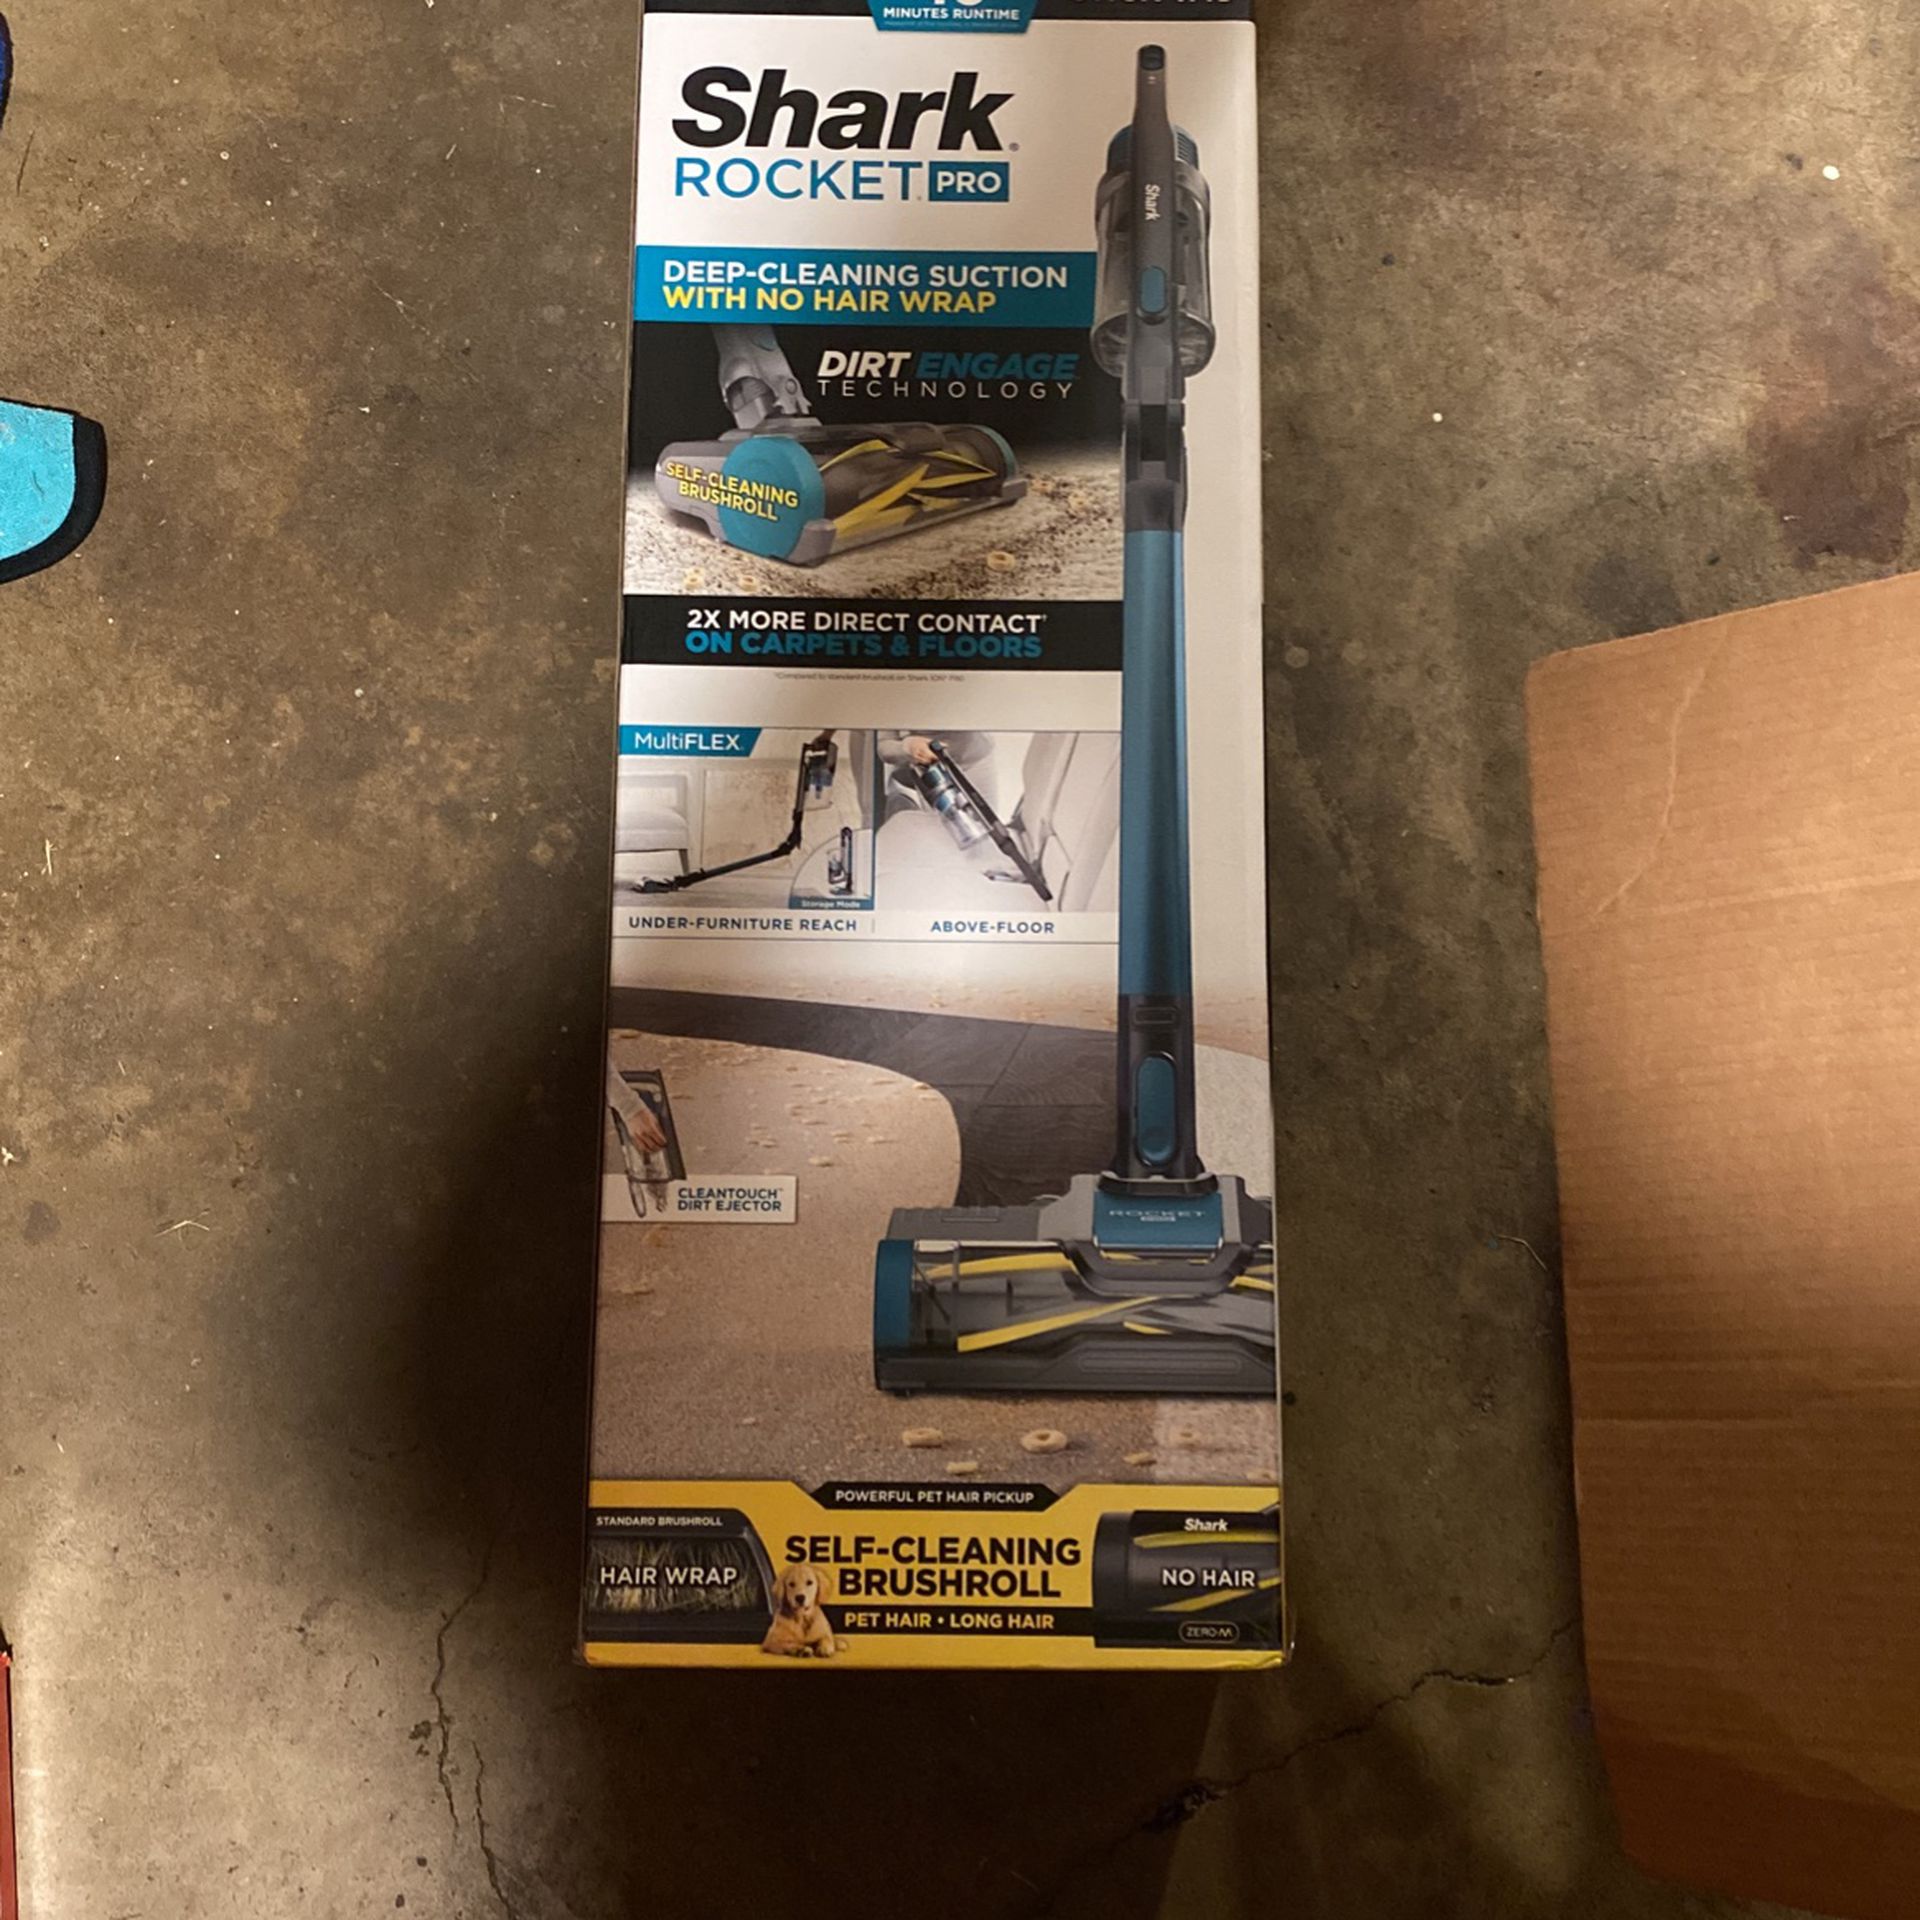 Shark® Cordless Pet Pro Lightweight Stick Vacuum (IZ140)